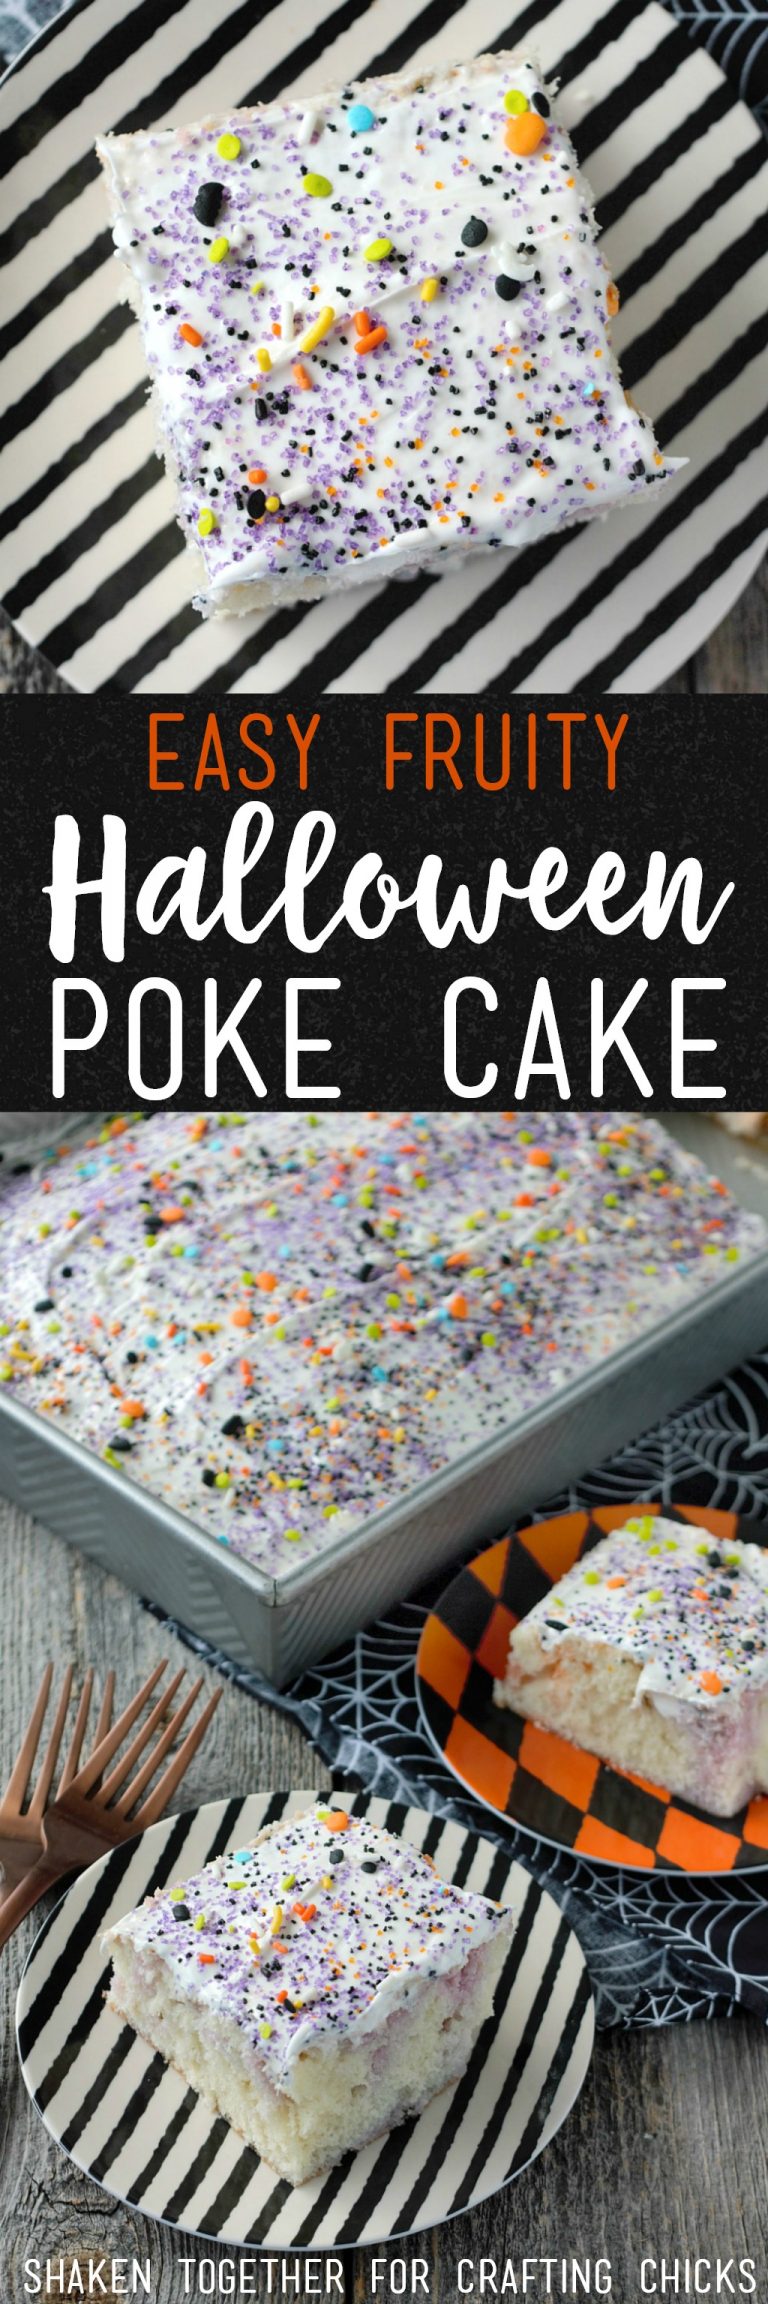 Easy Fruity Halloween Poke Cake - The Crafting Chicks